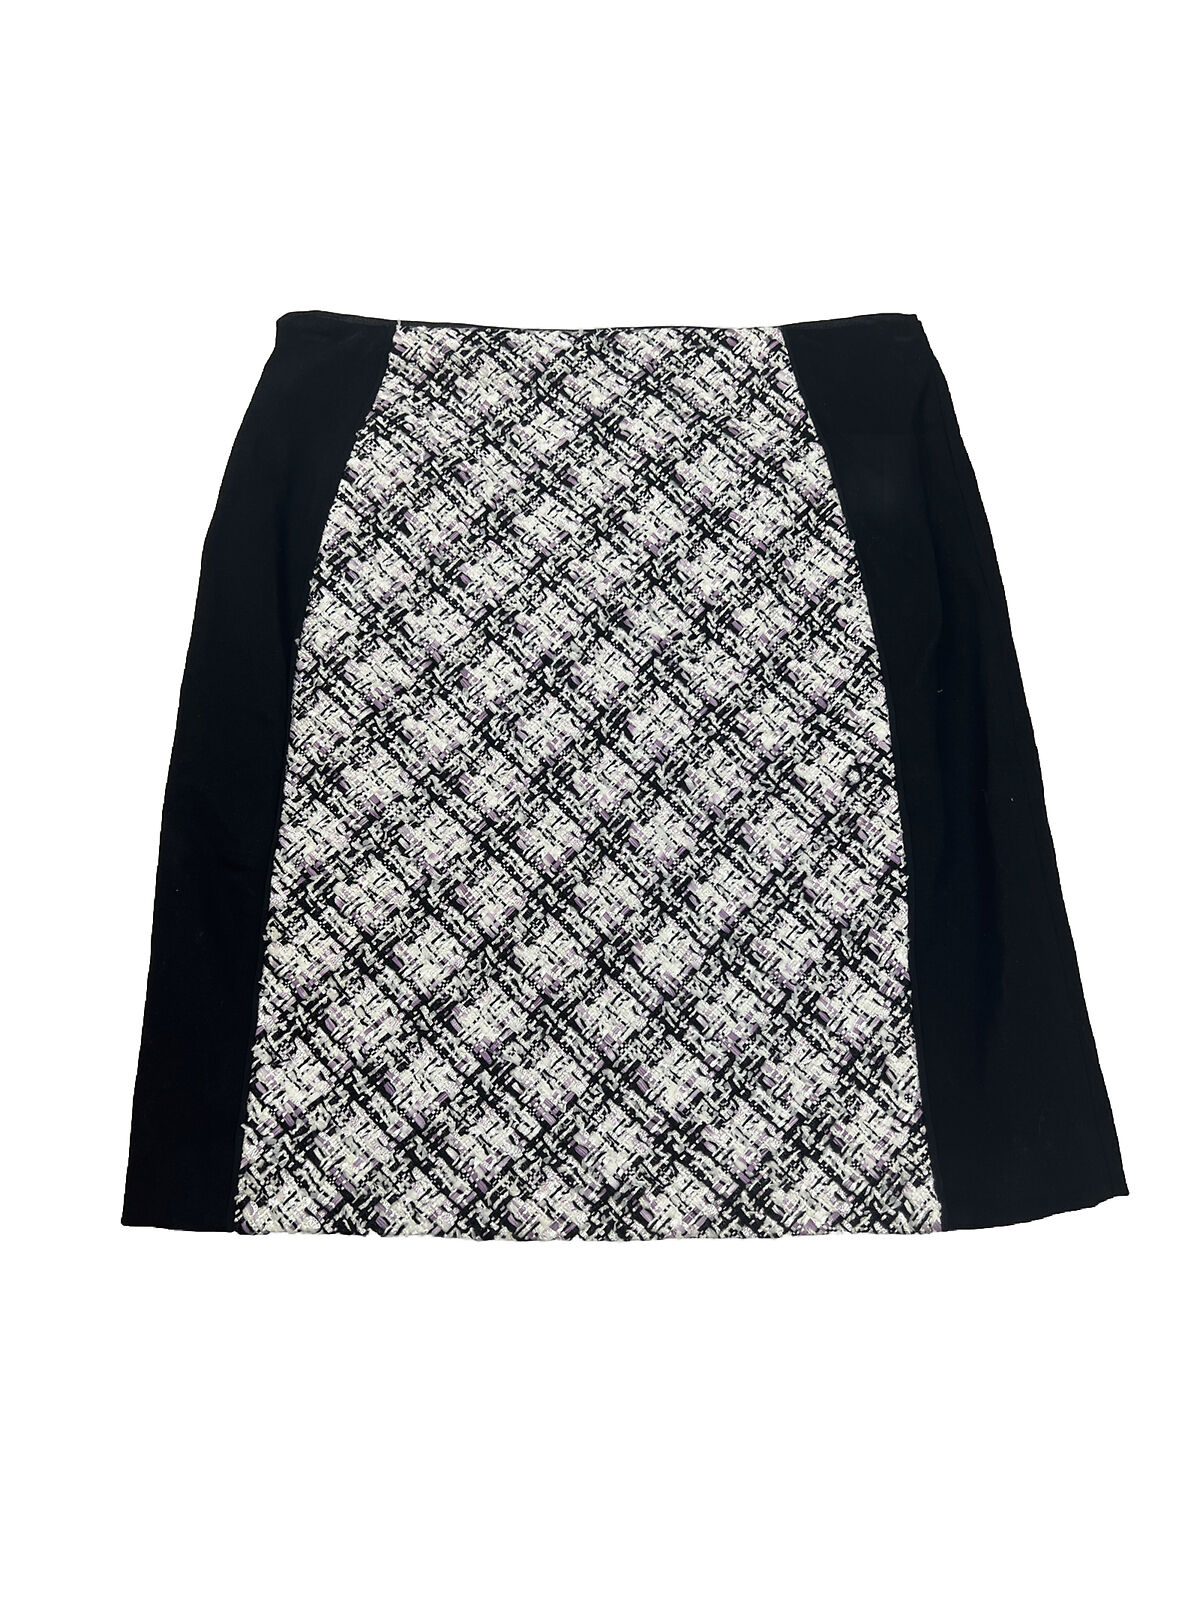 NEW White House Black Market Women's Black Tweed Ponte Pencil Skirt - 4